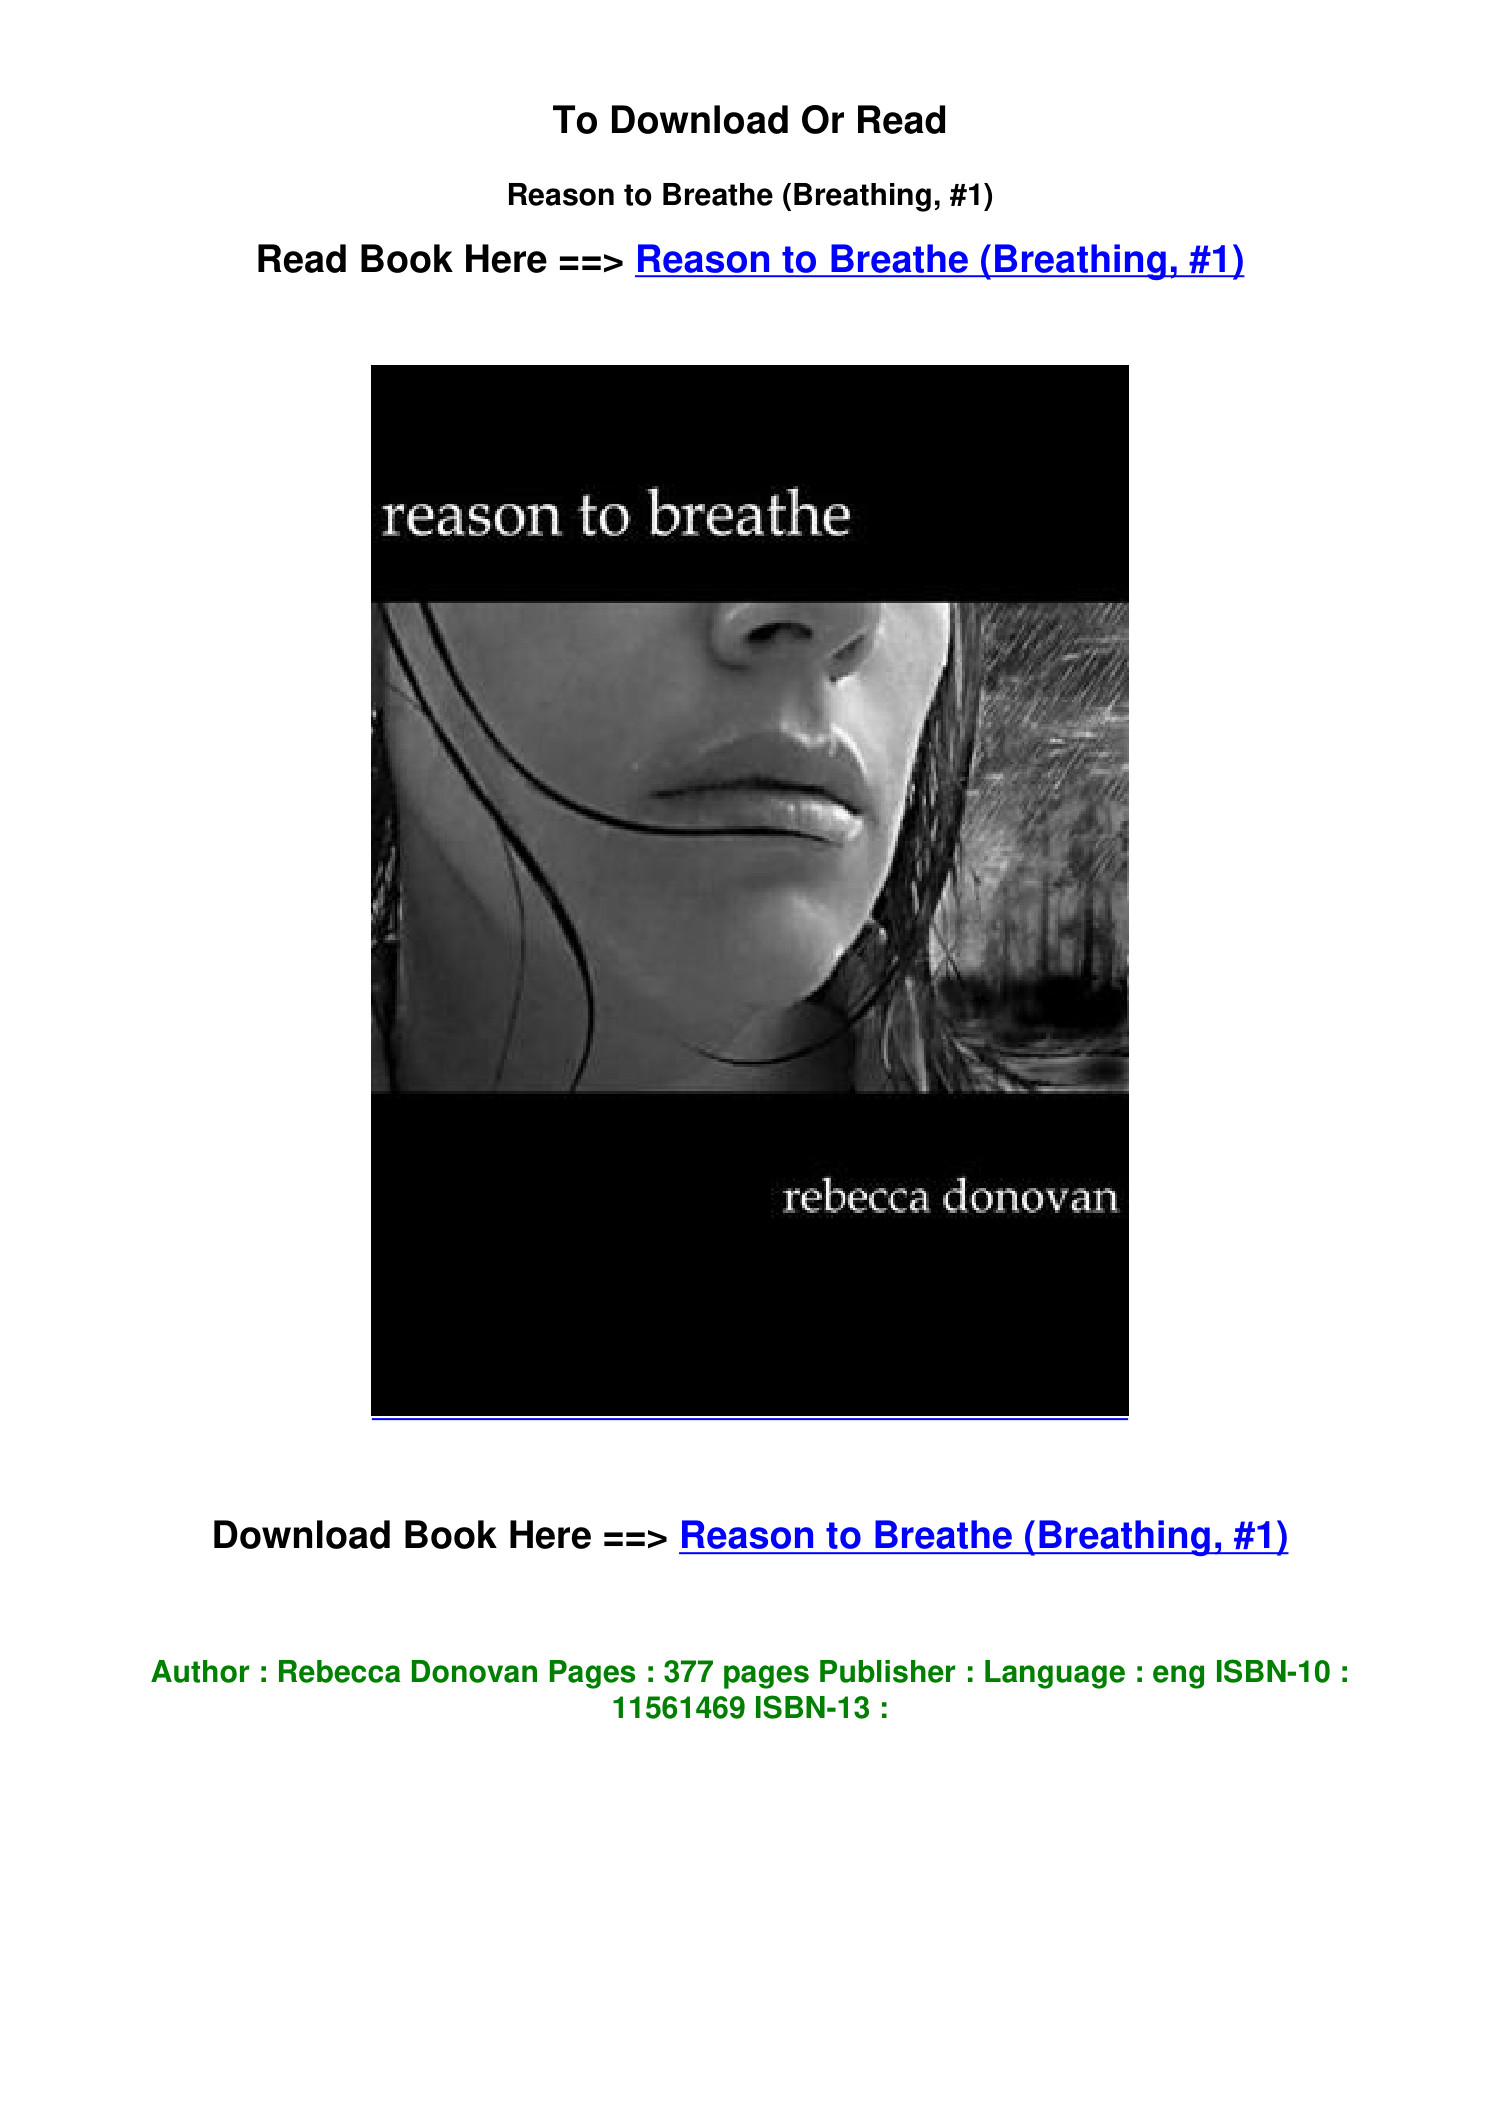 Download Epub Reason To Breathe Breathing 1 By Rebecca Donovan Pdf Docdroid